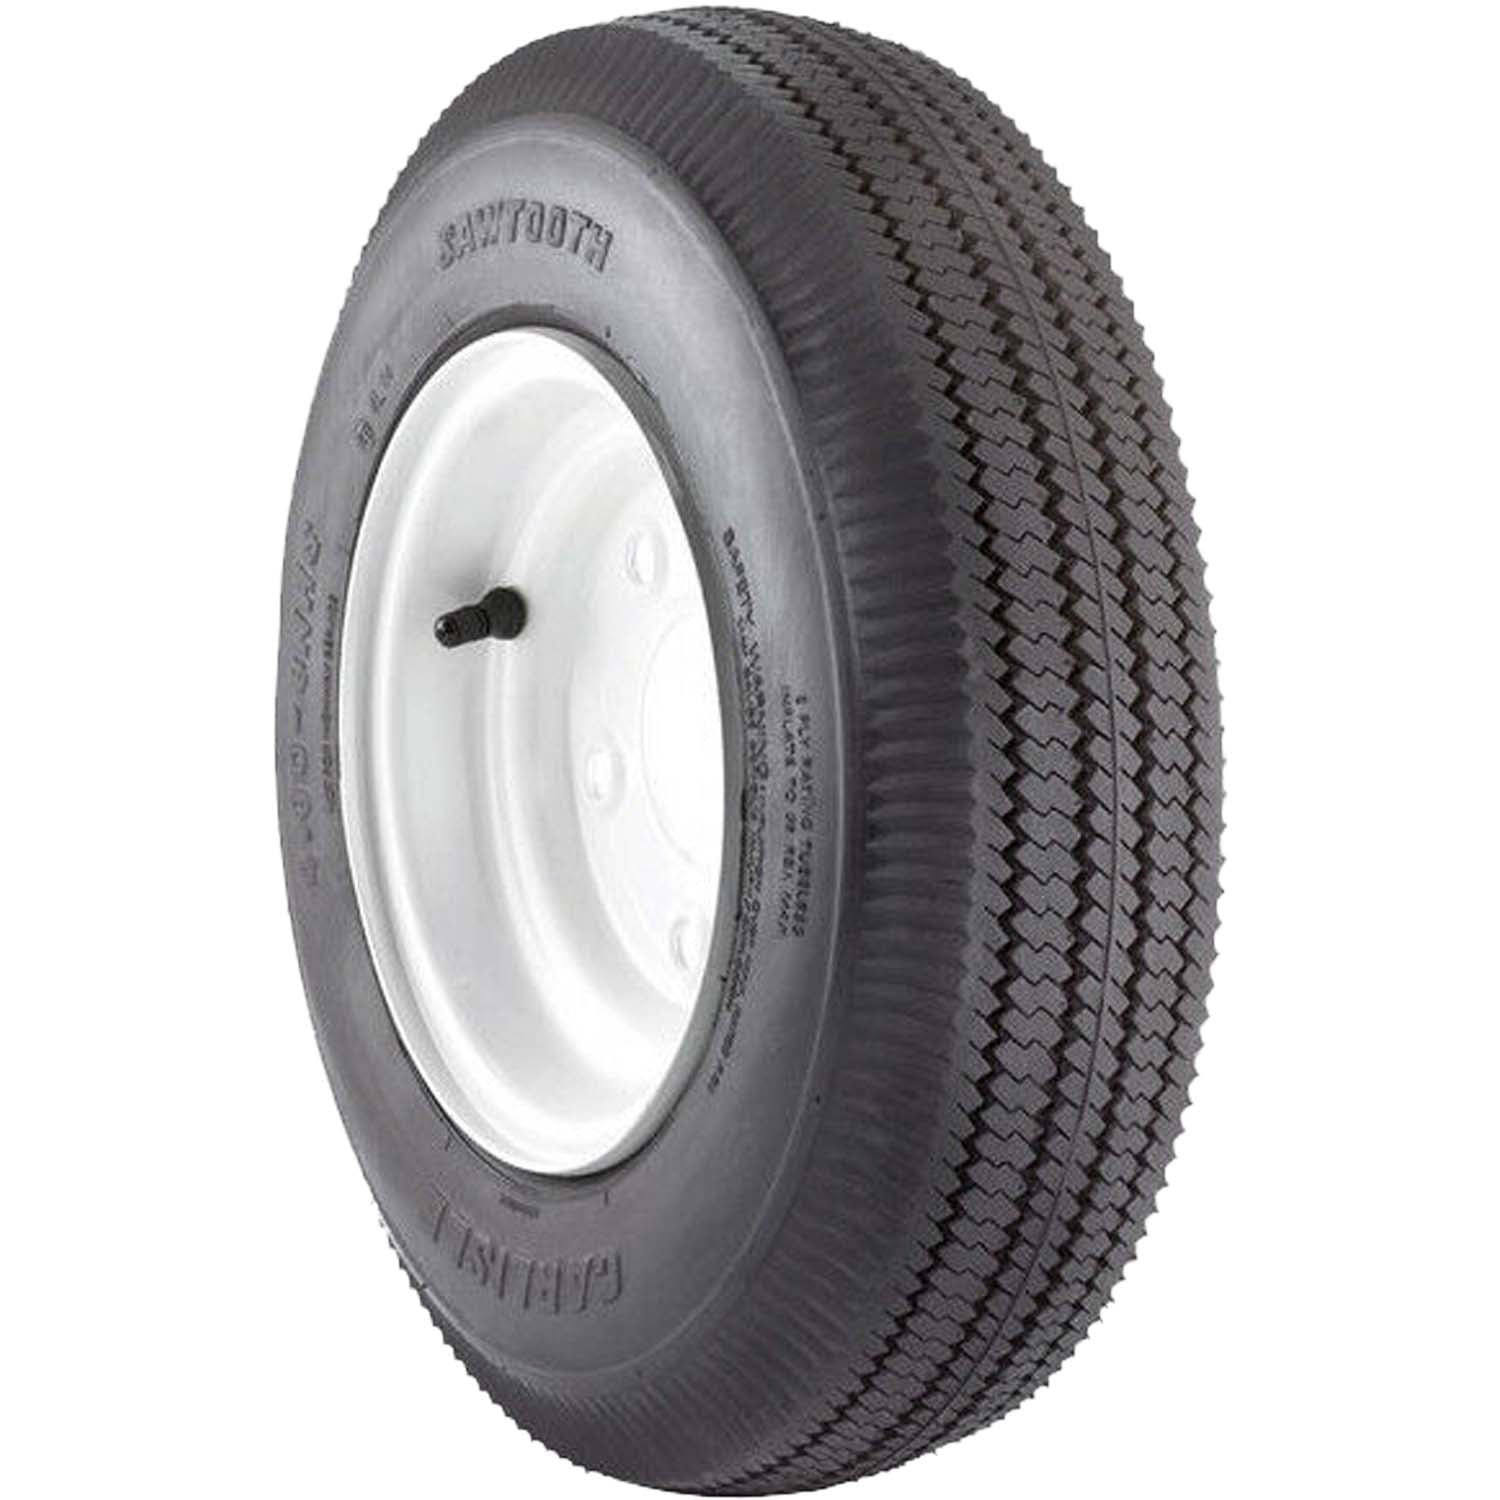 Carlisle Sawtooth Utility Tire 6ply 5.30-6